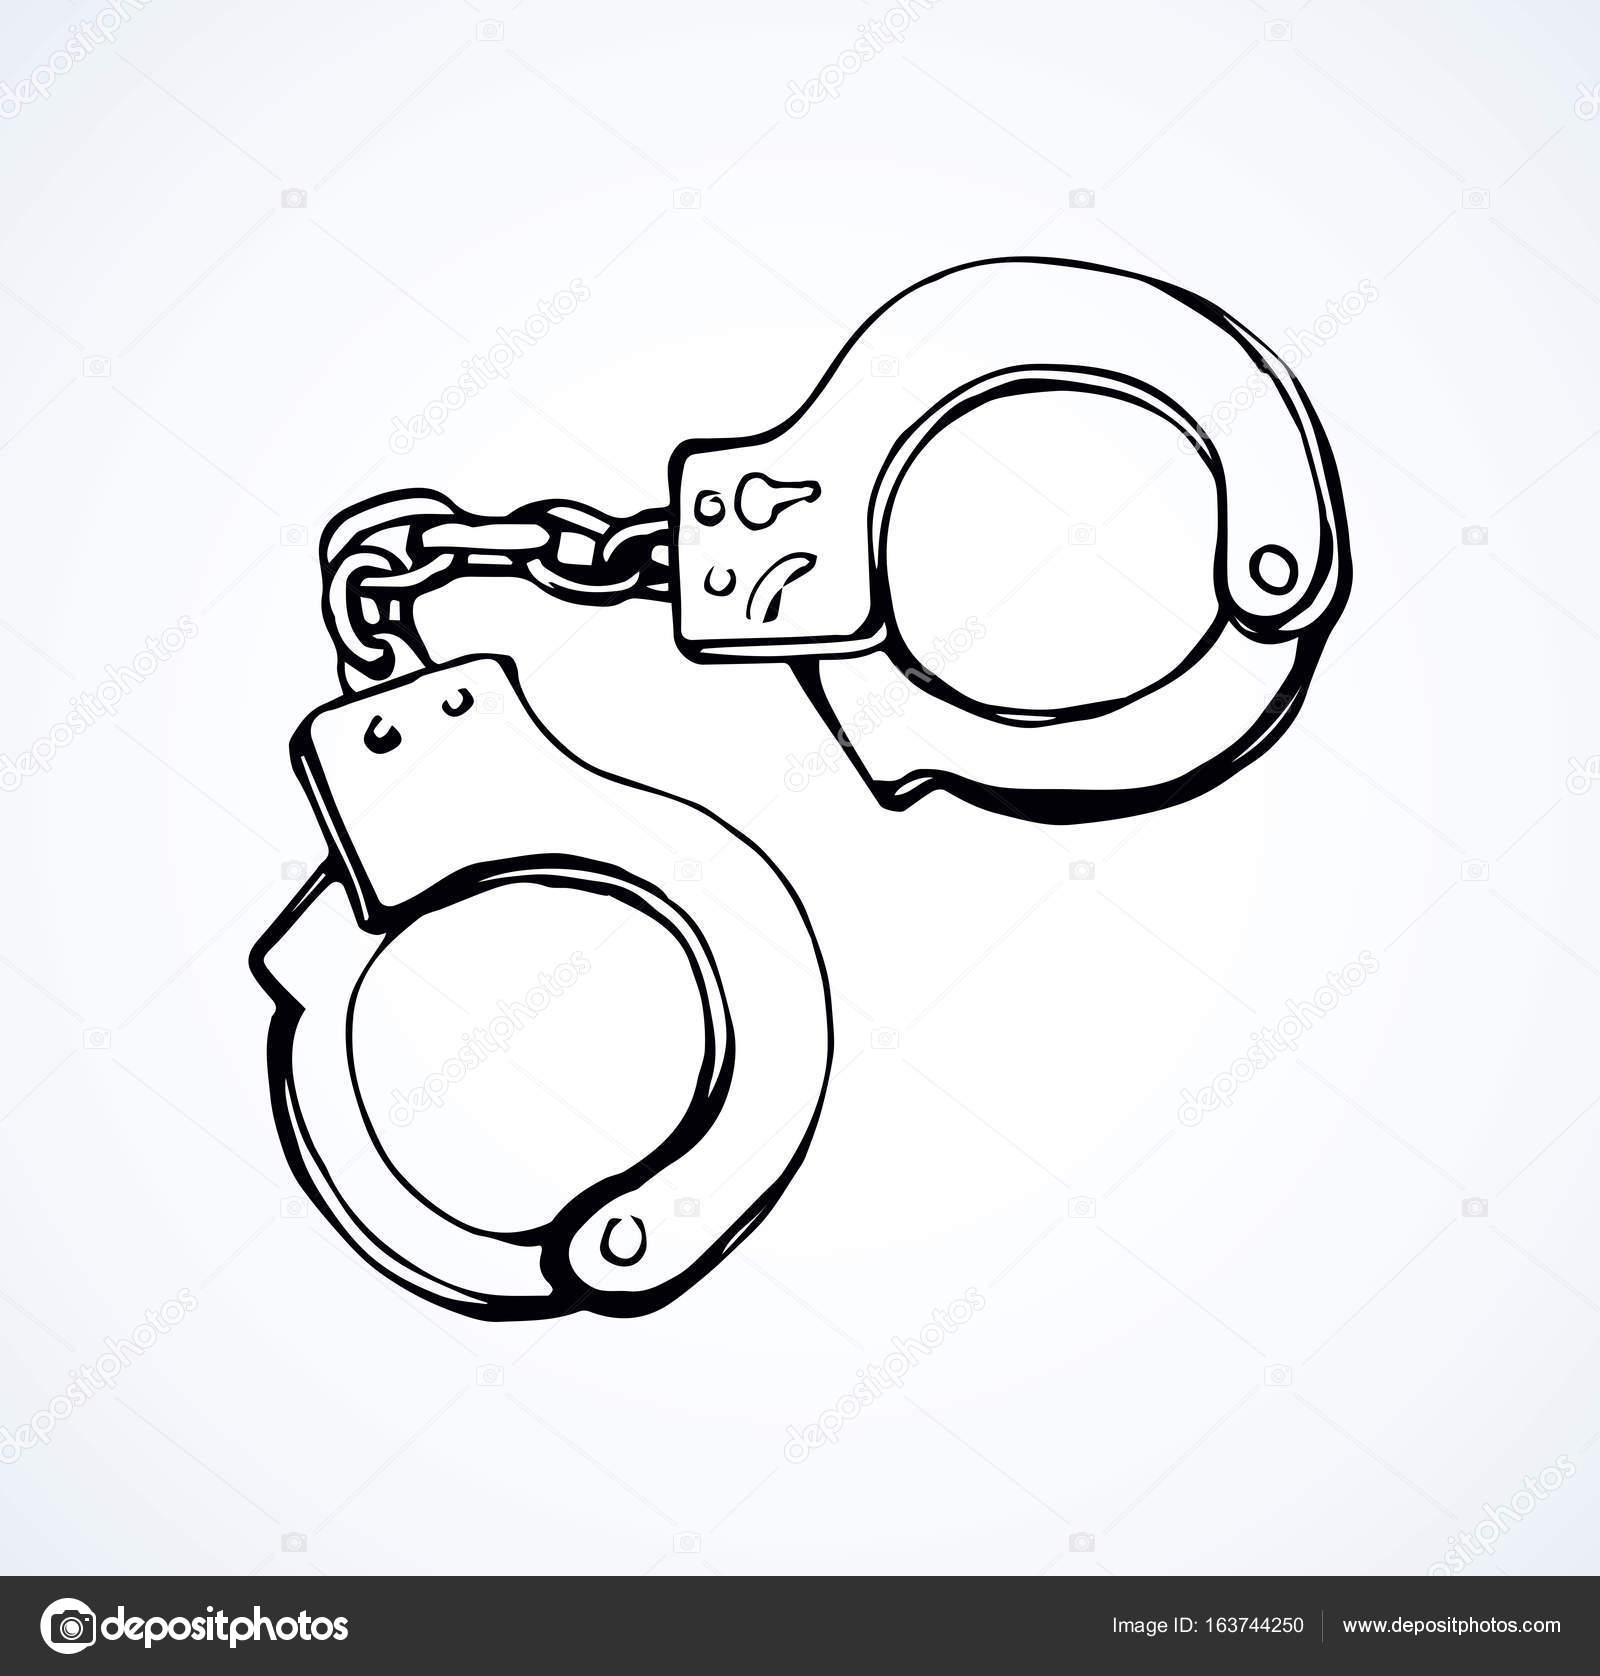 Handcuffs Drawing at GetDrawings Free download